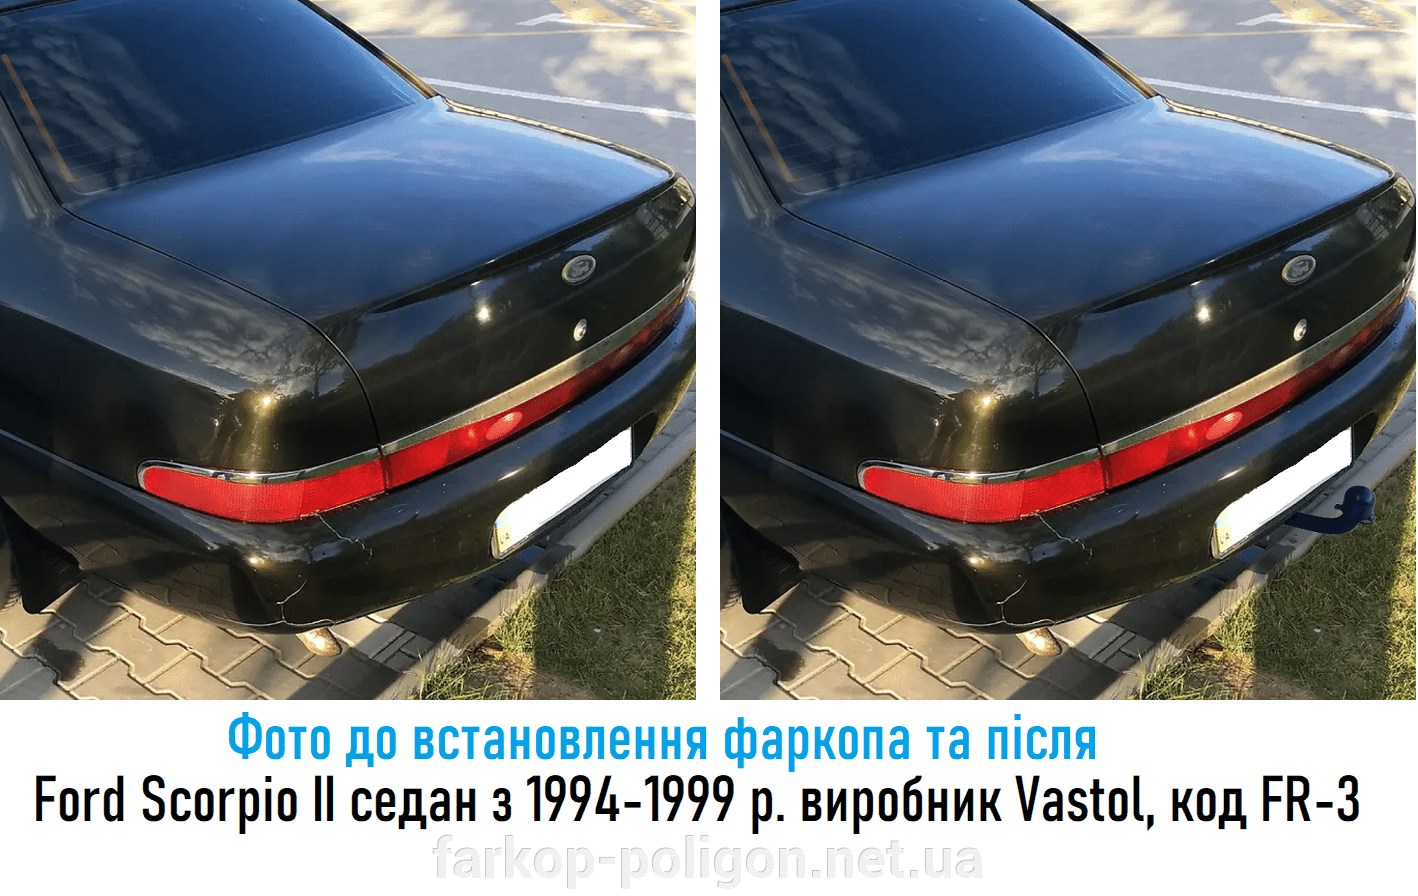 фото фаркопа до и после установки Ford Scorpio II седан c 1994-1999 г. производитель Vastol, артикул FR-3